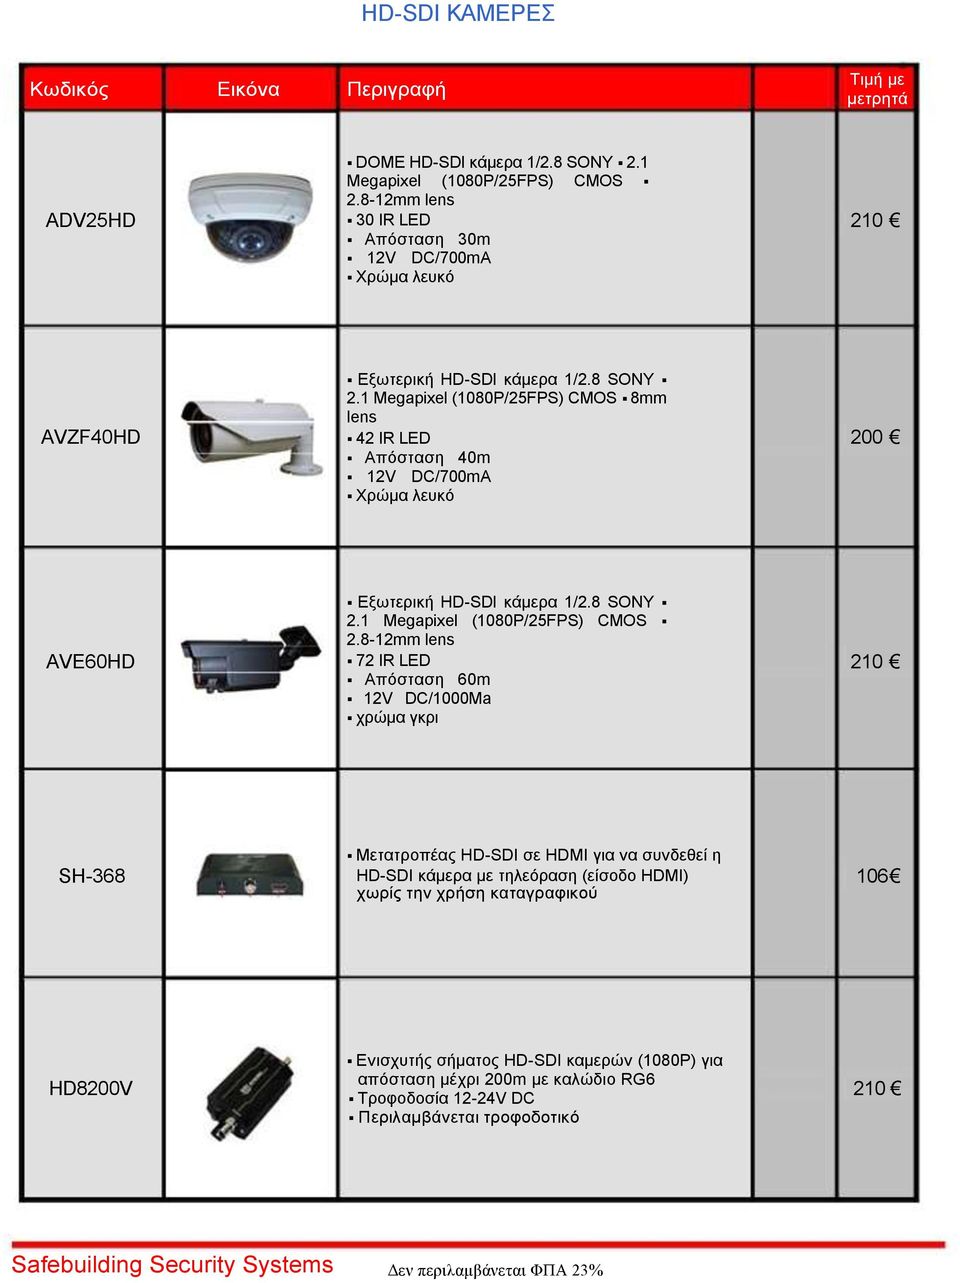 8-12mm lens AVE60HD 72 IR LED 210 Απόσταση 60m /1000Ma χρώμα γκρι Μετατροπέας HD-SDI σε HDMI για να συνδεθεί η SH-368 HD-SDI κάμερα με τηλεόραση (είσοδο HDMI) 106